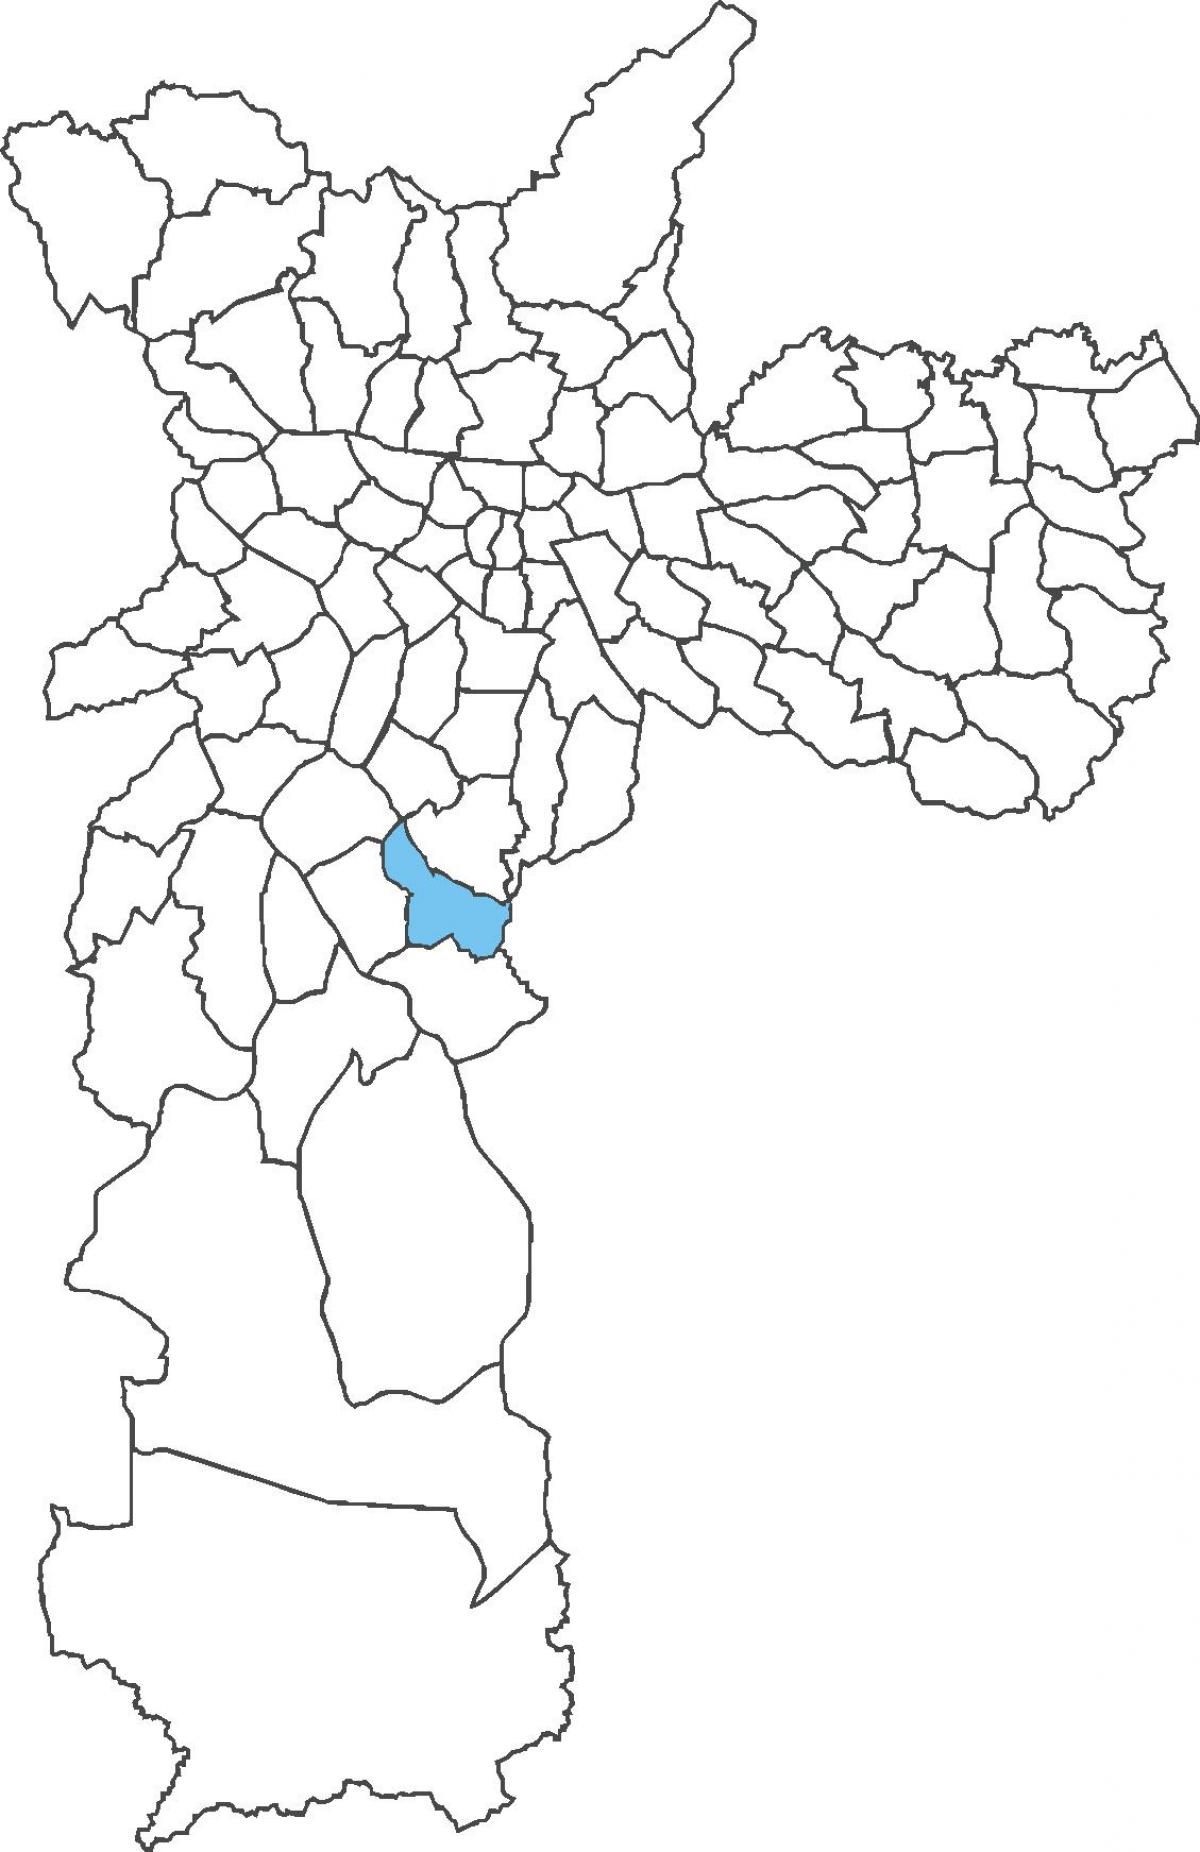 Карта на Cidade Ademar област